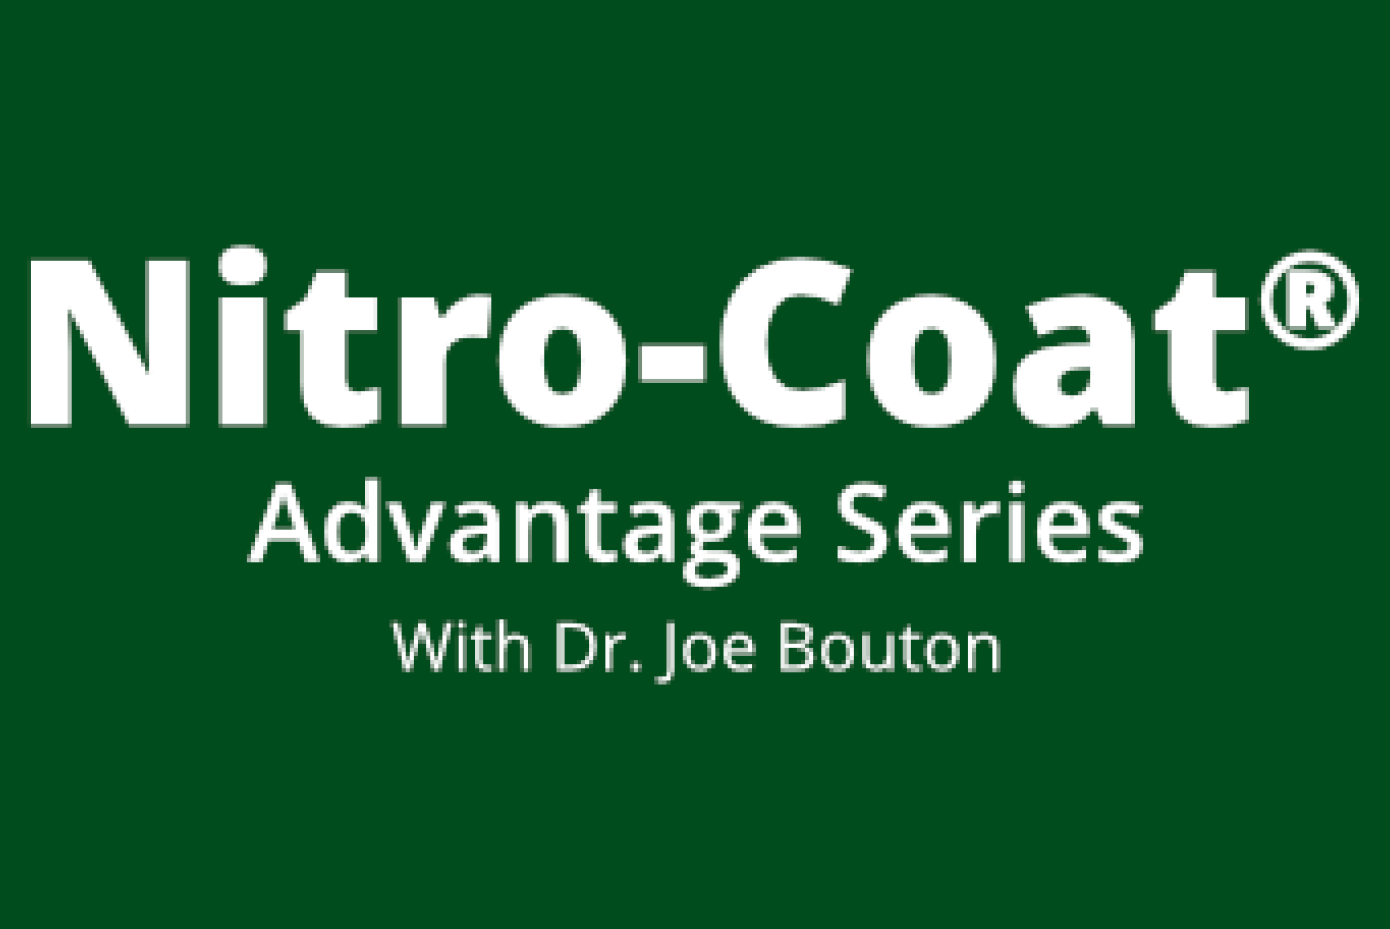 NitroCoat® Advantage Series video poster